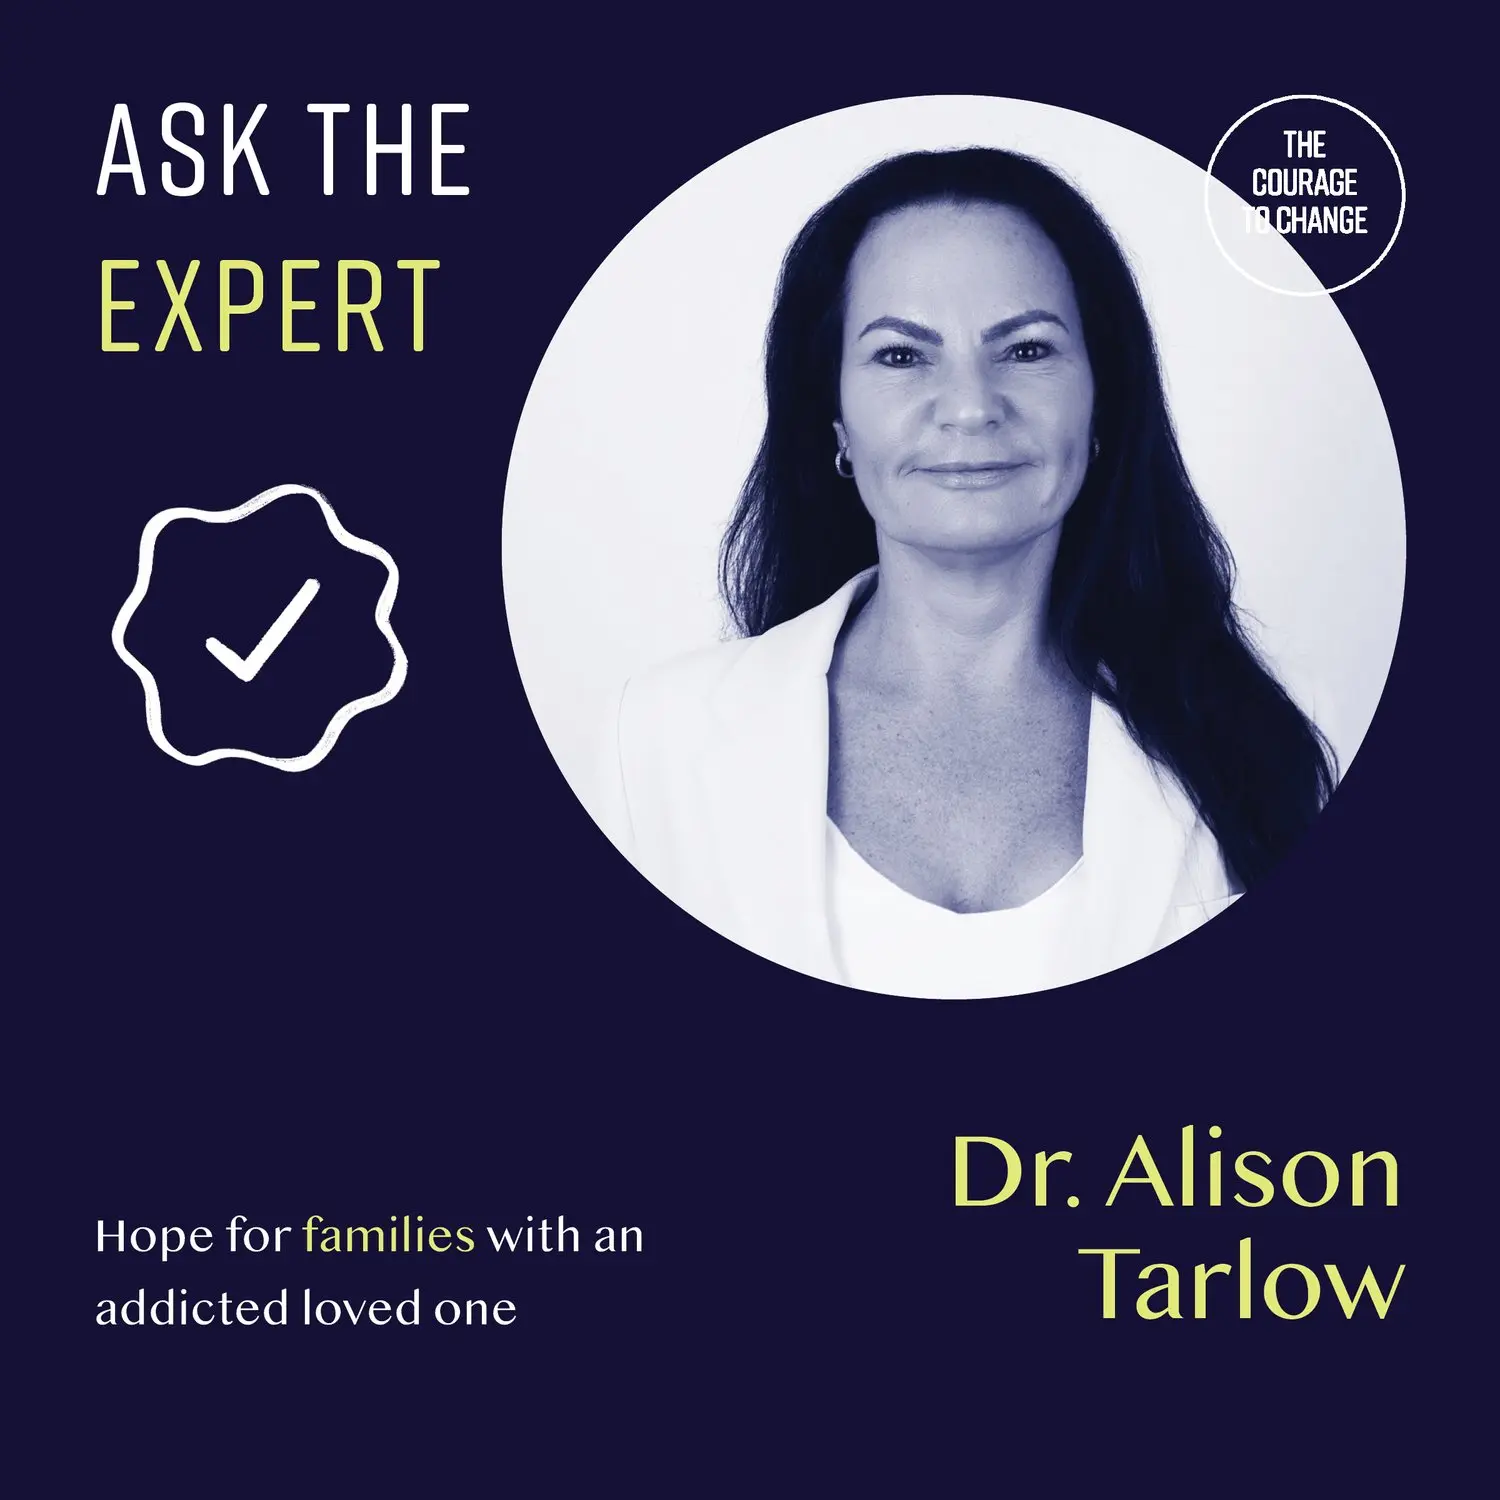 Dr. Alison Tarlow